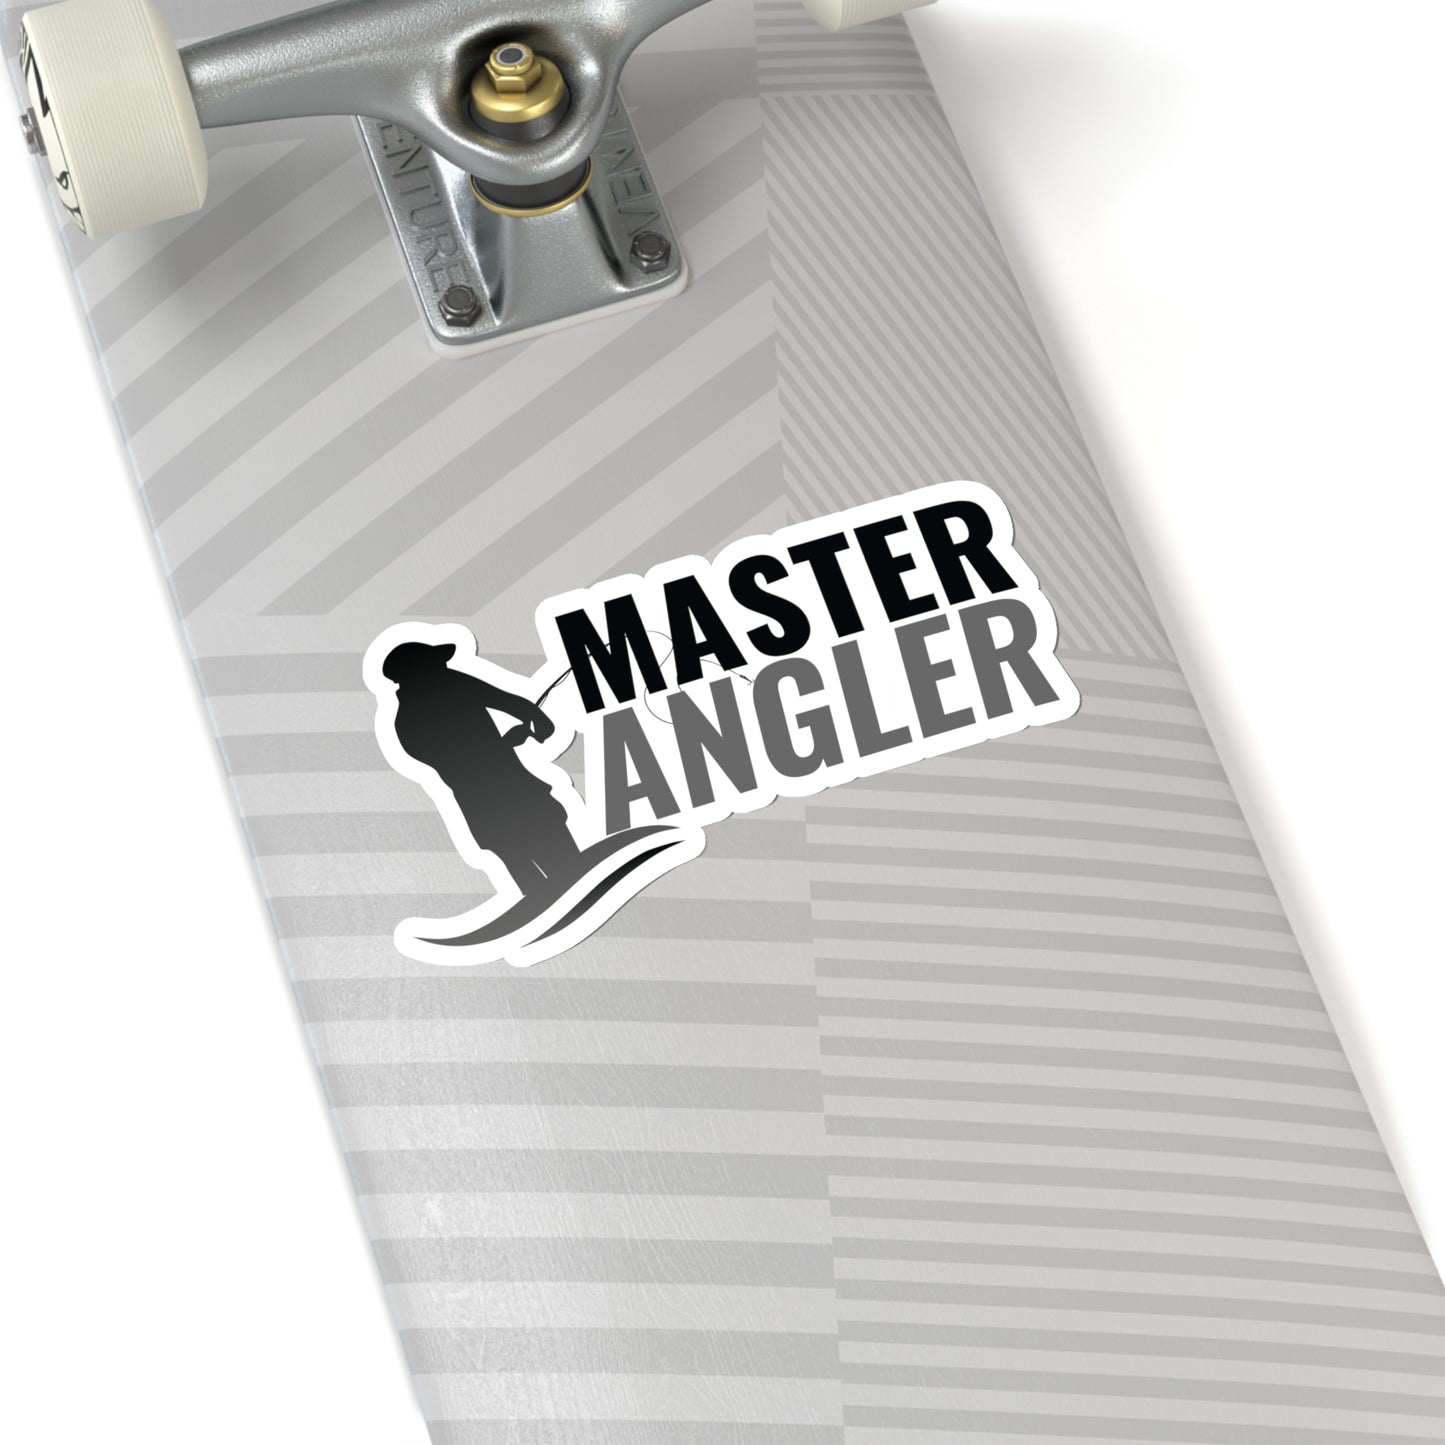 Master Angler Sticker - Black